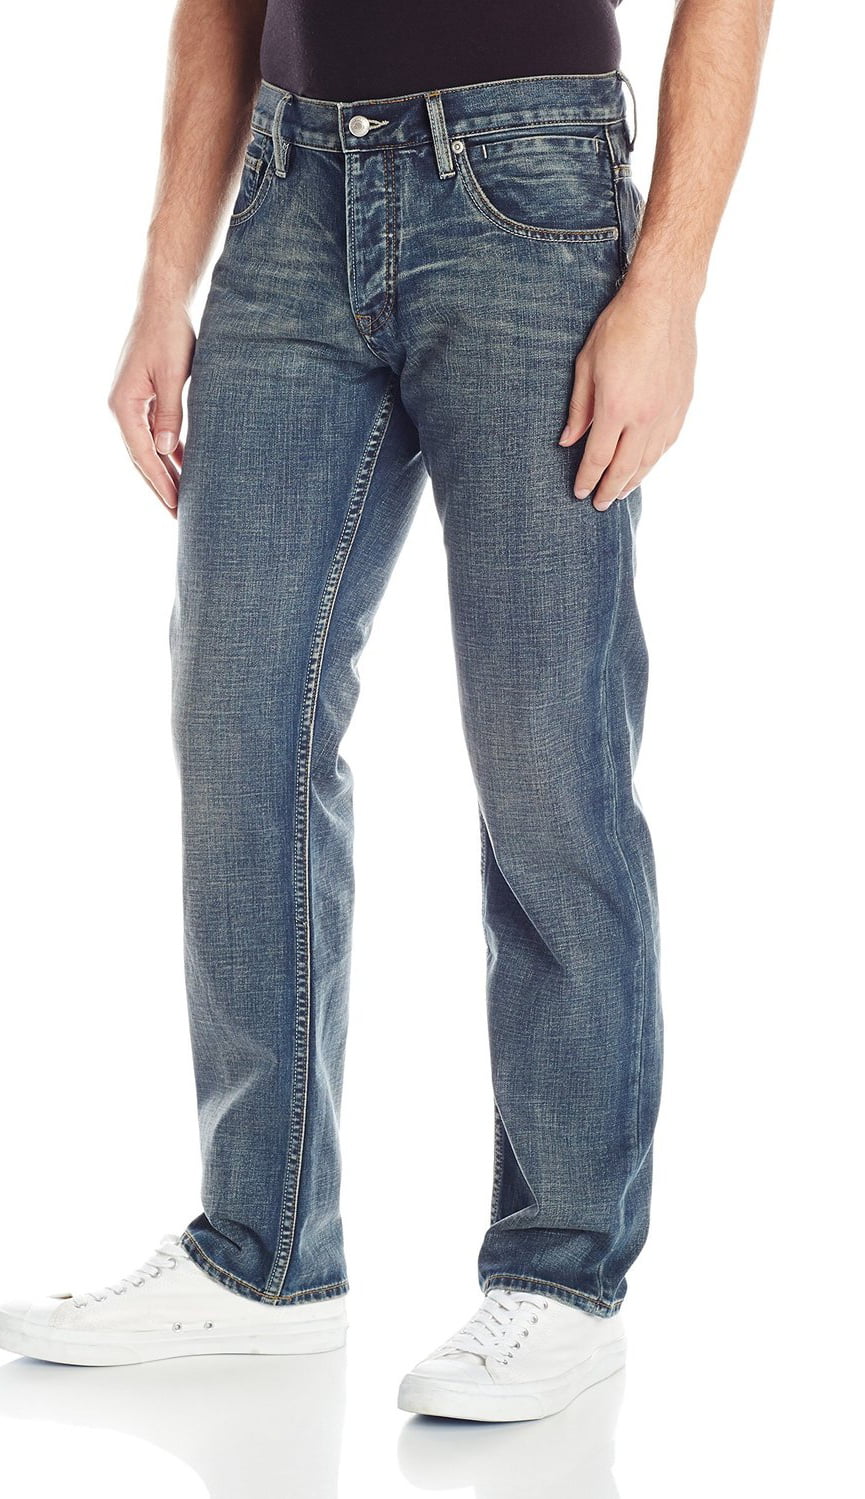 Quiksilver Men's Sequel Vintage Cracked Denim Jeans-Vintage Cracked ...